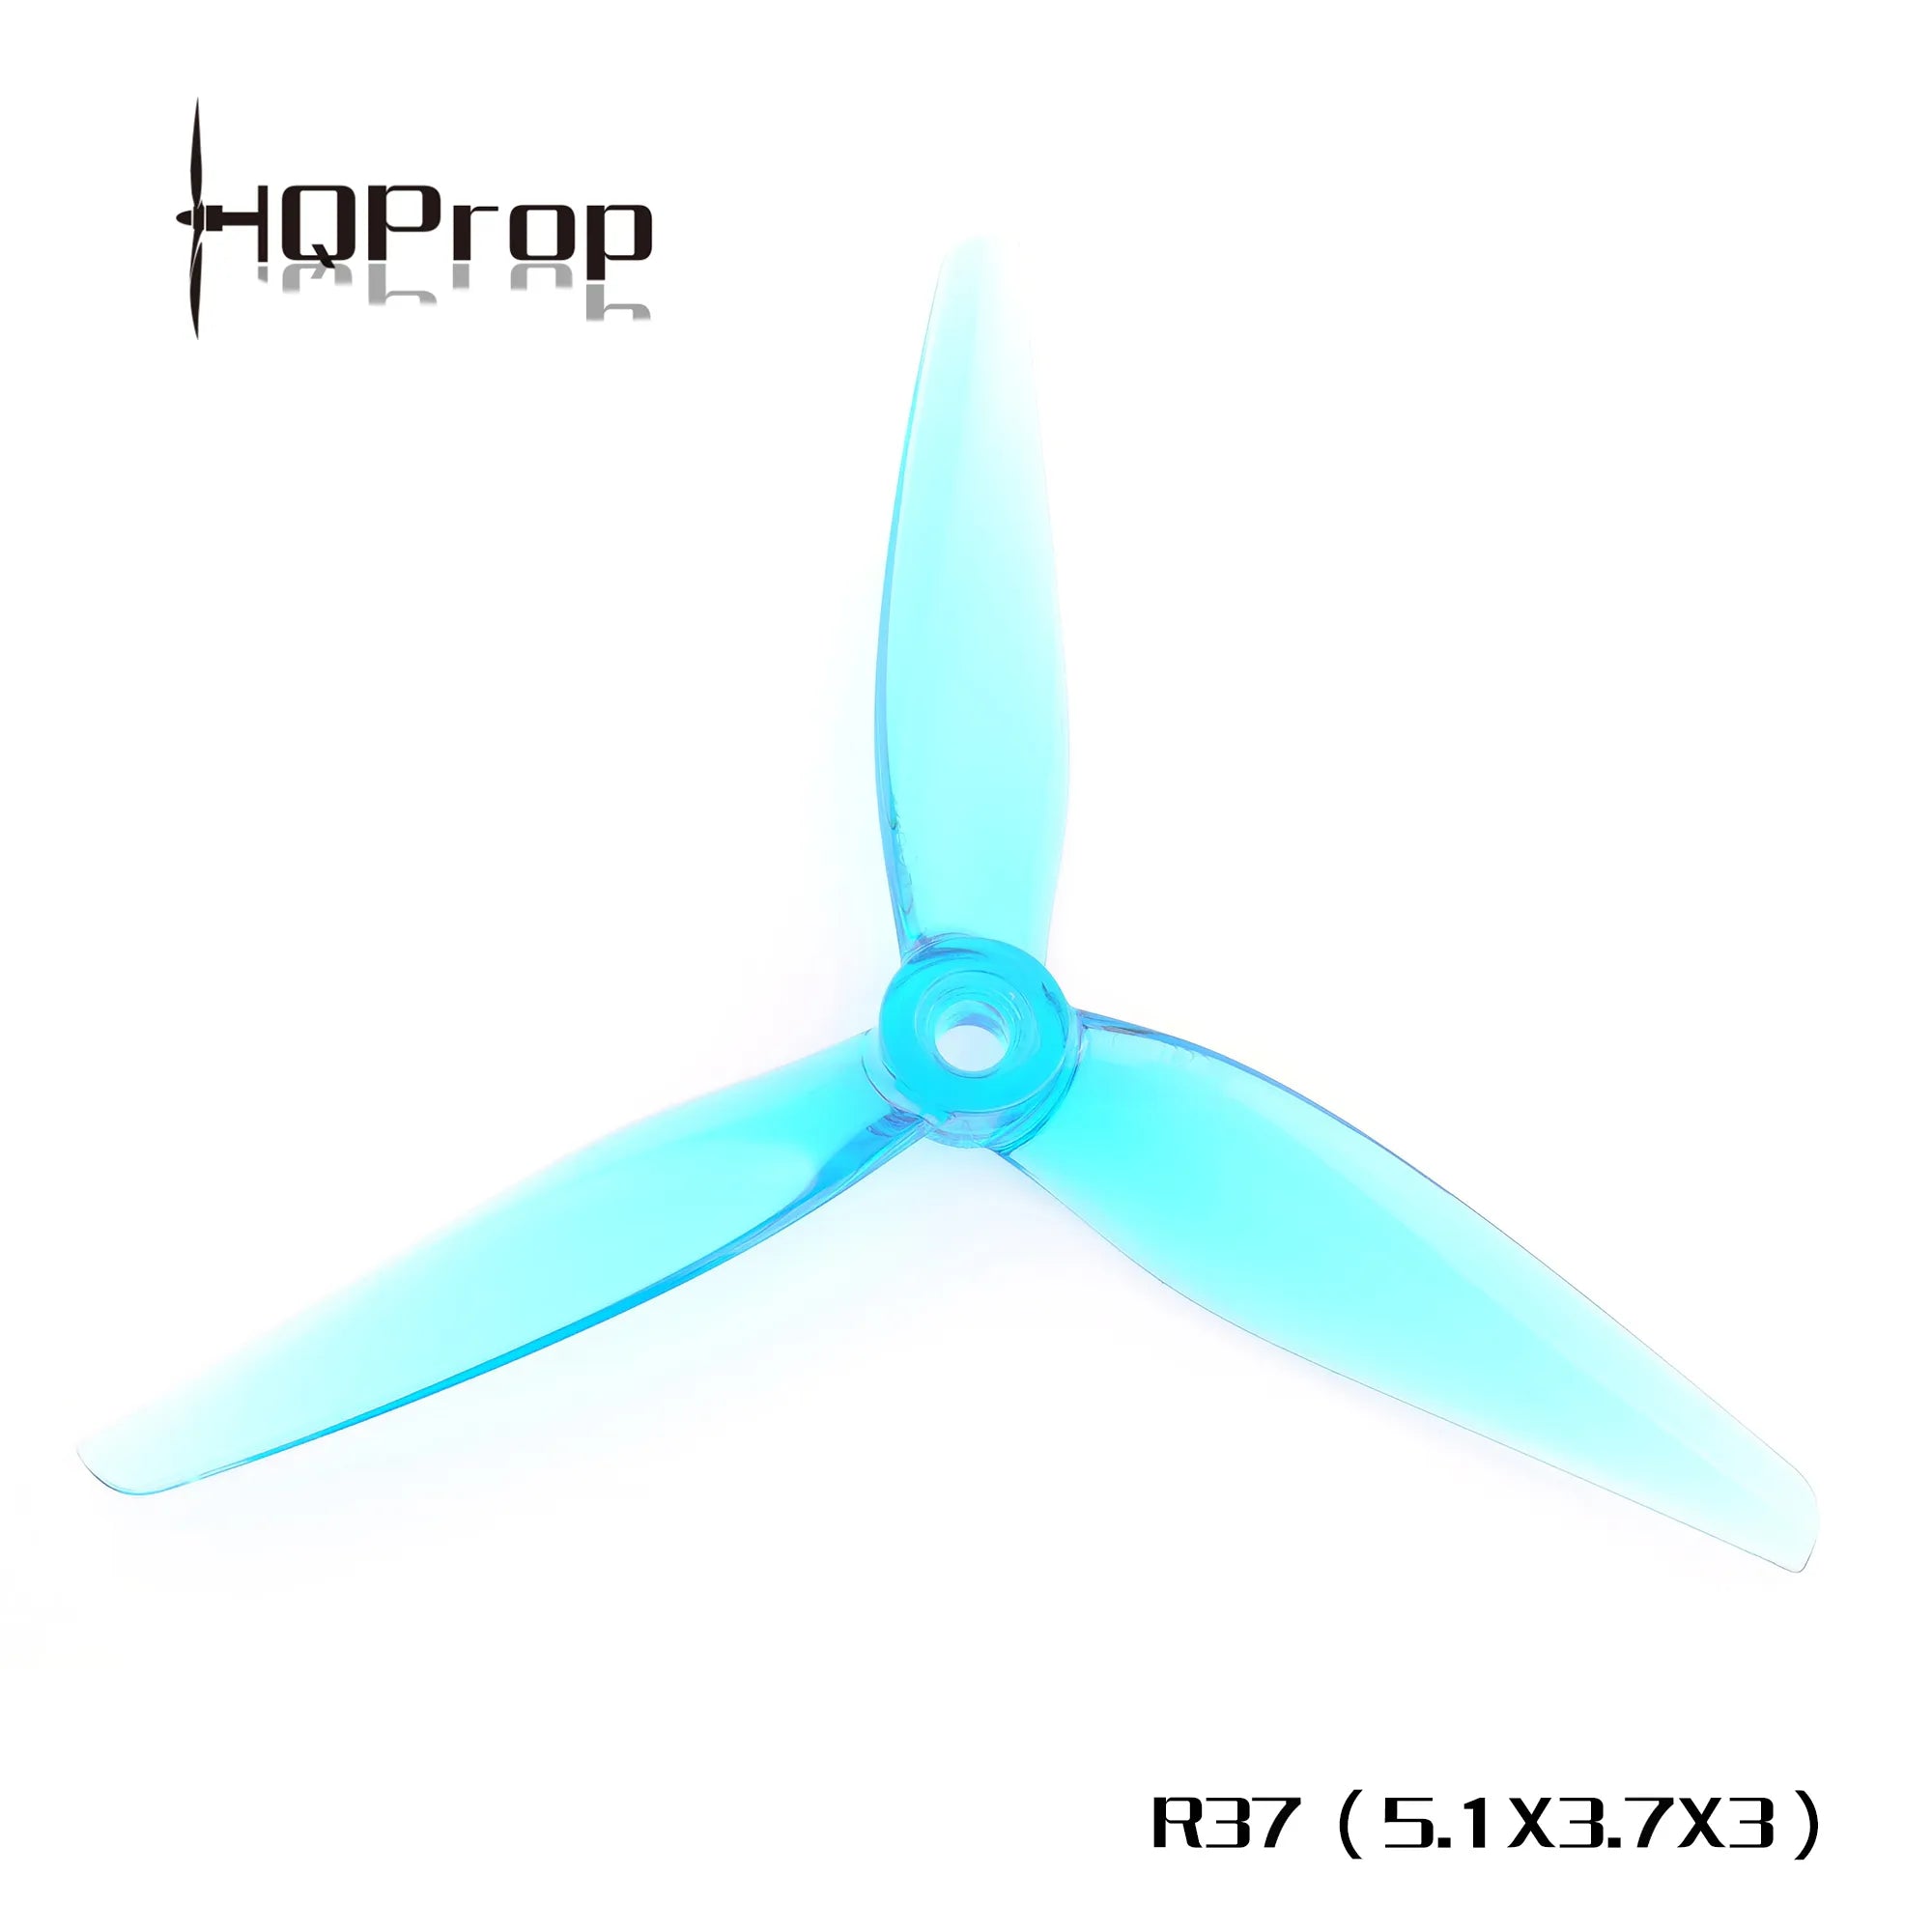 HQProp R37 5.1x3.7x3 FPV Propellers (2CCW+2CW)